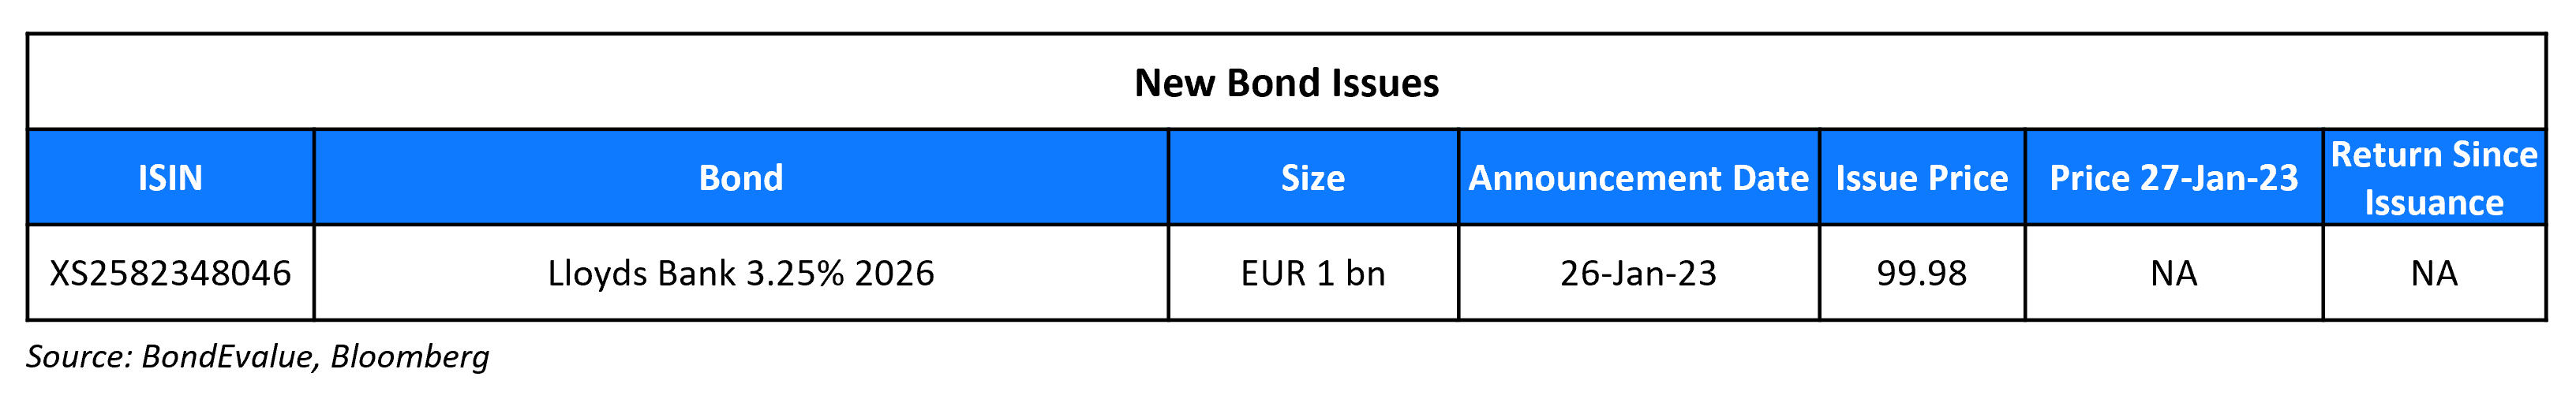 New Bond Issues 27 Jan 23